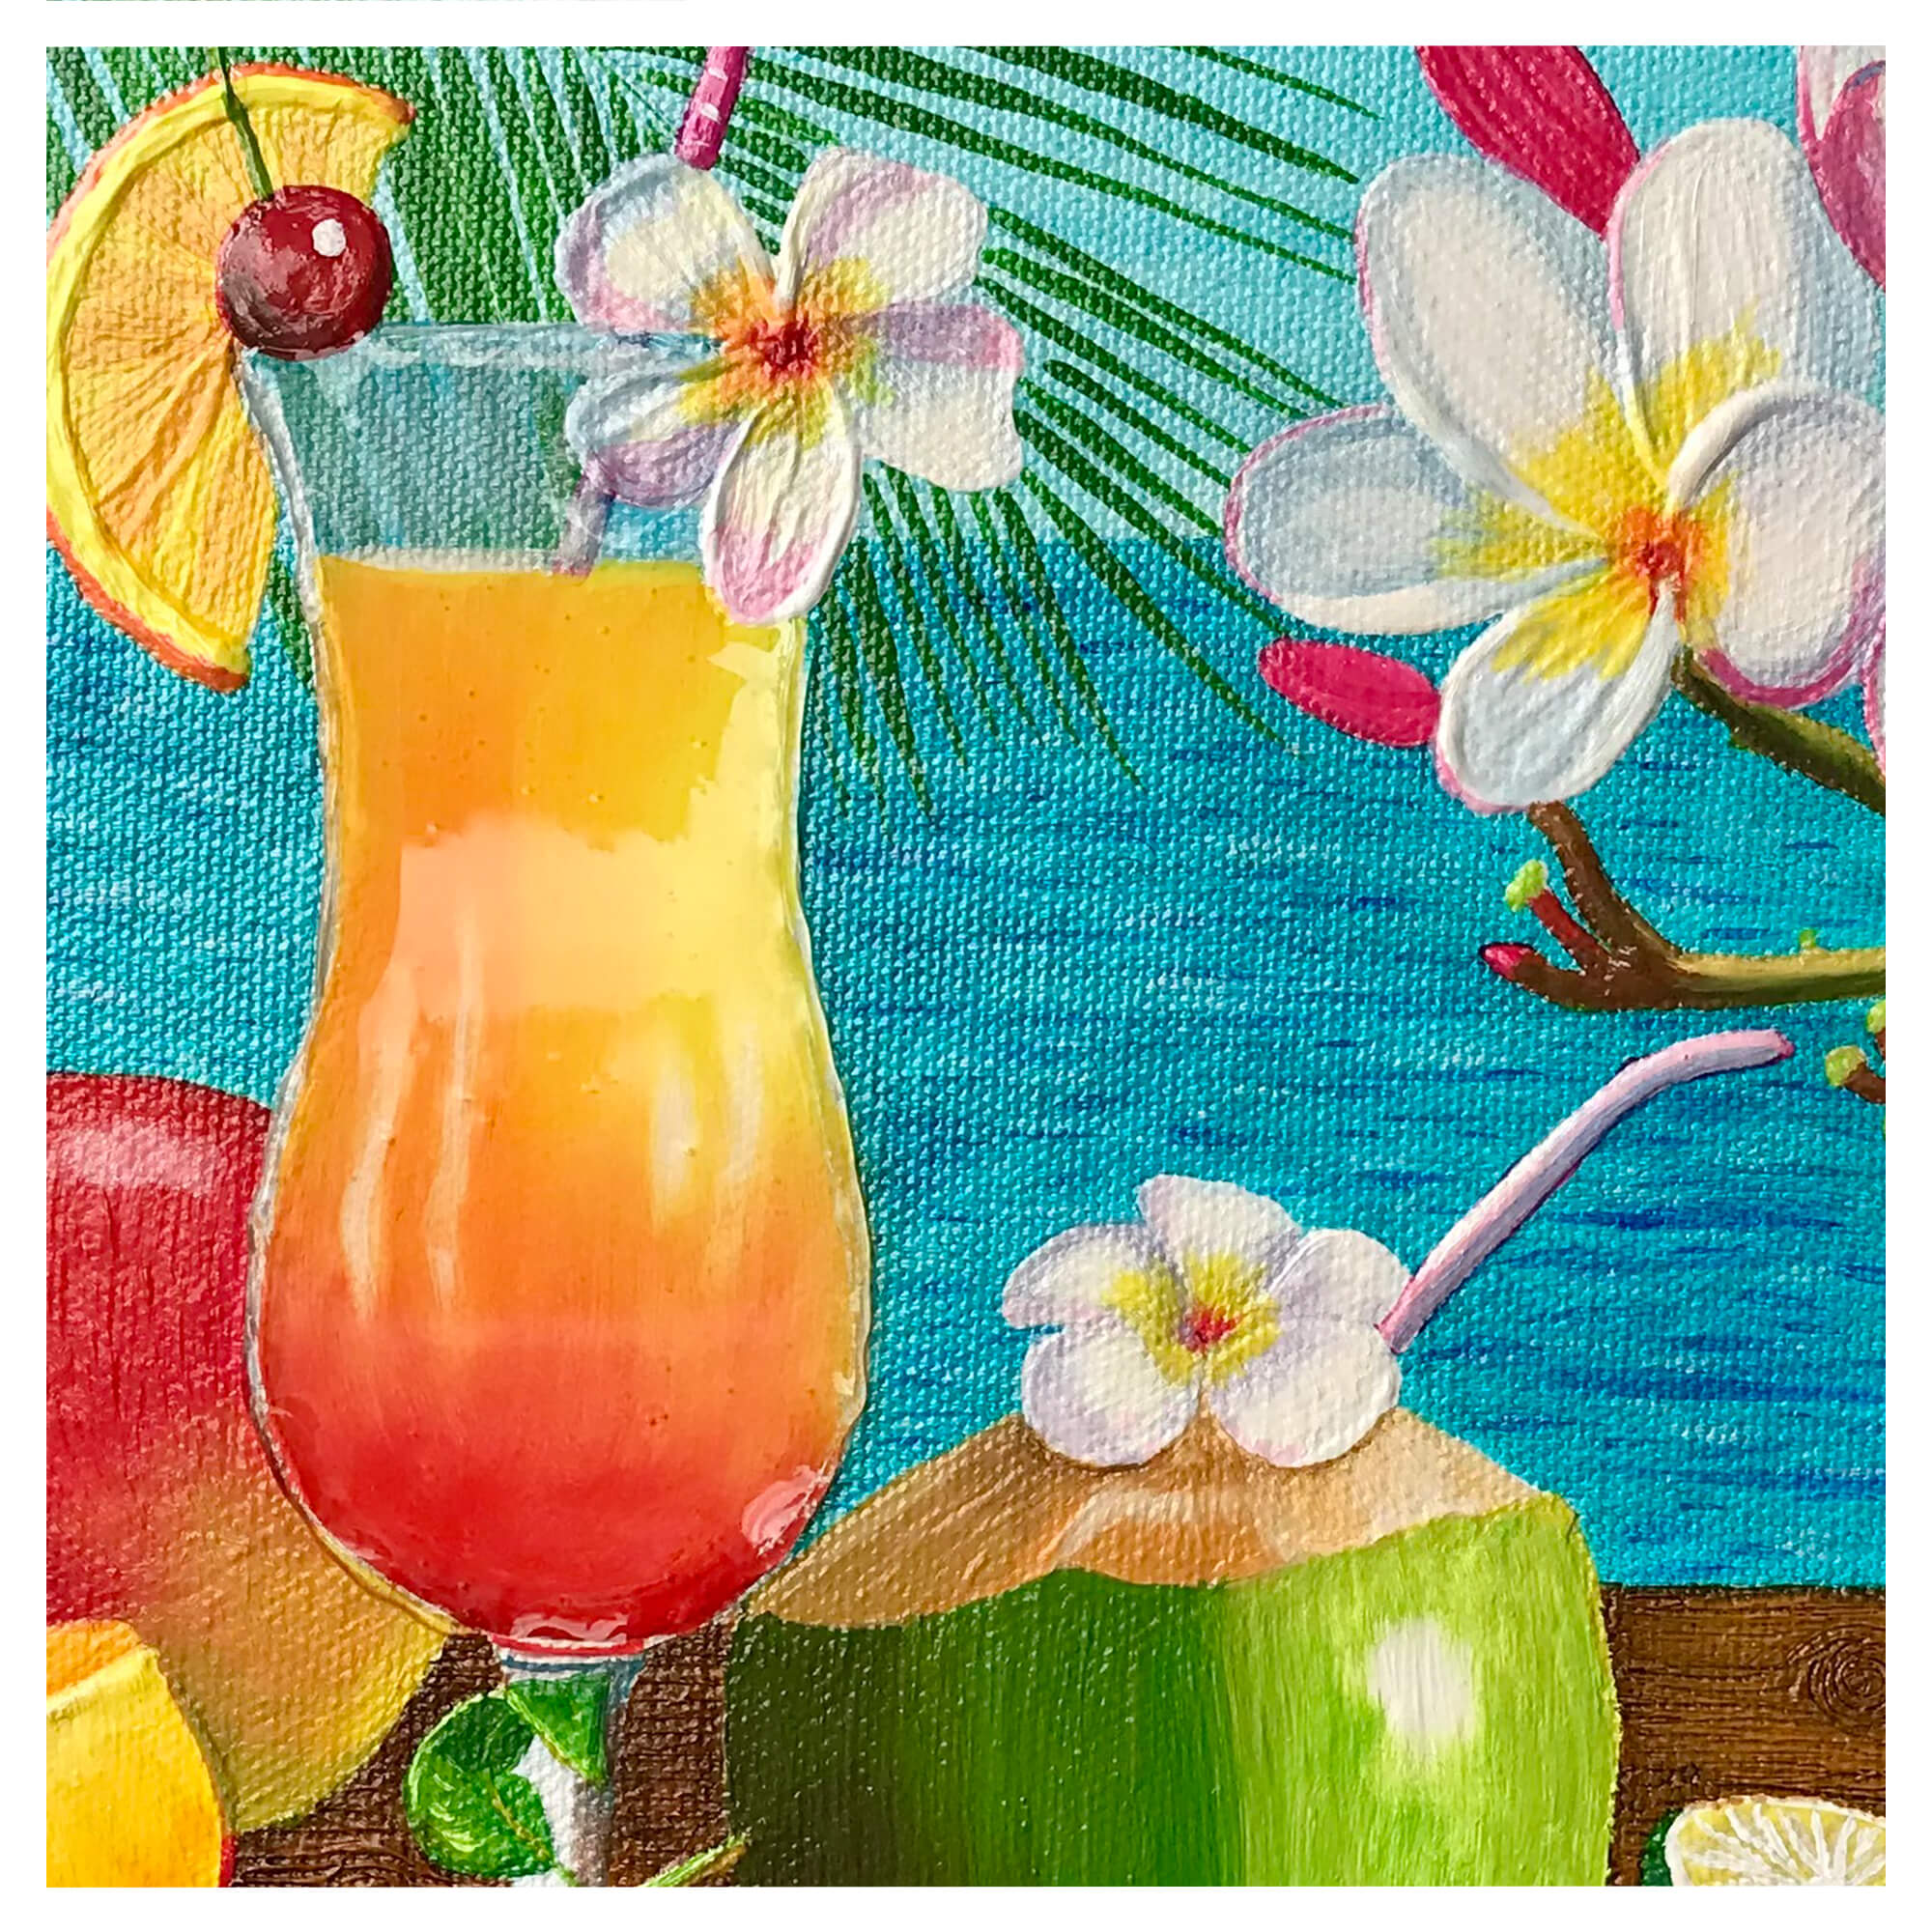 An illustration of a drink by hawaii artist Galina Lintz